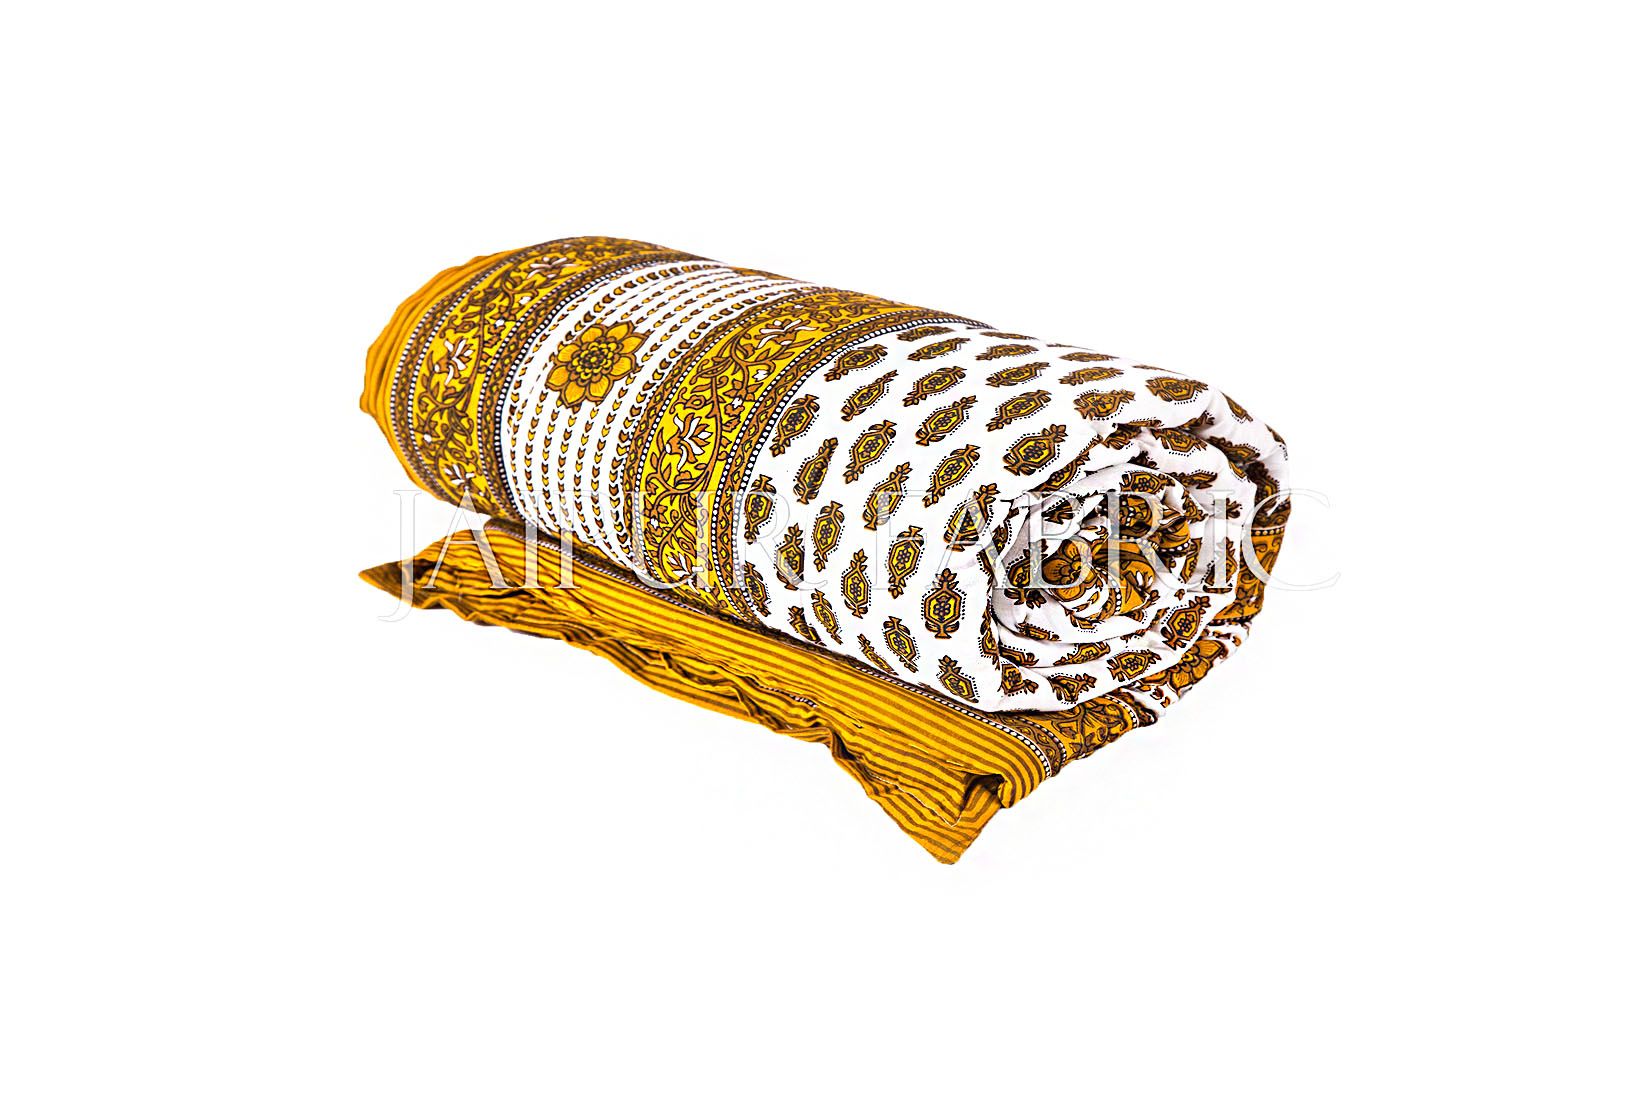 Beige Leaf Print Cotton Handmade Single Bed Jaipuri Quilt